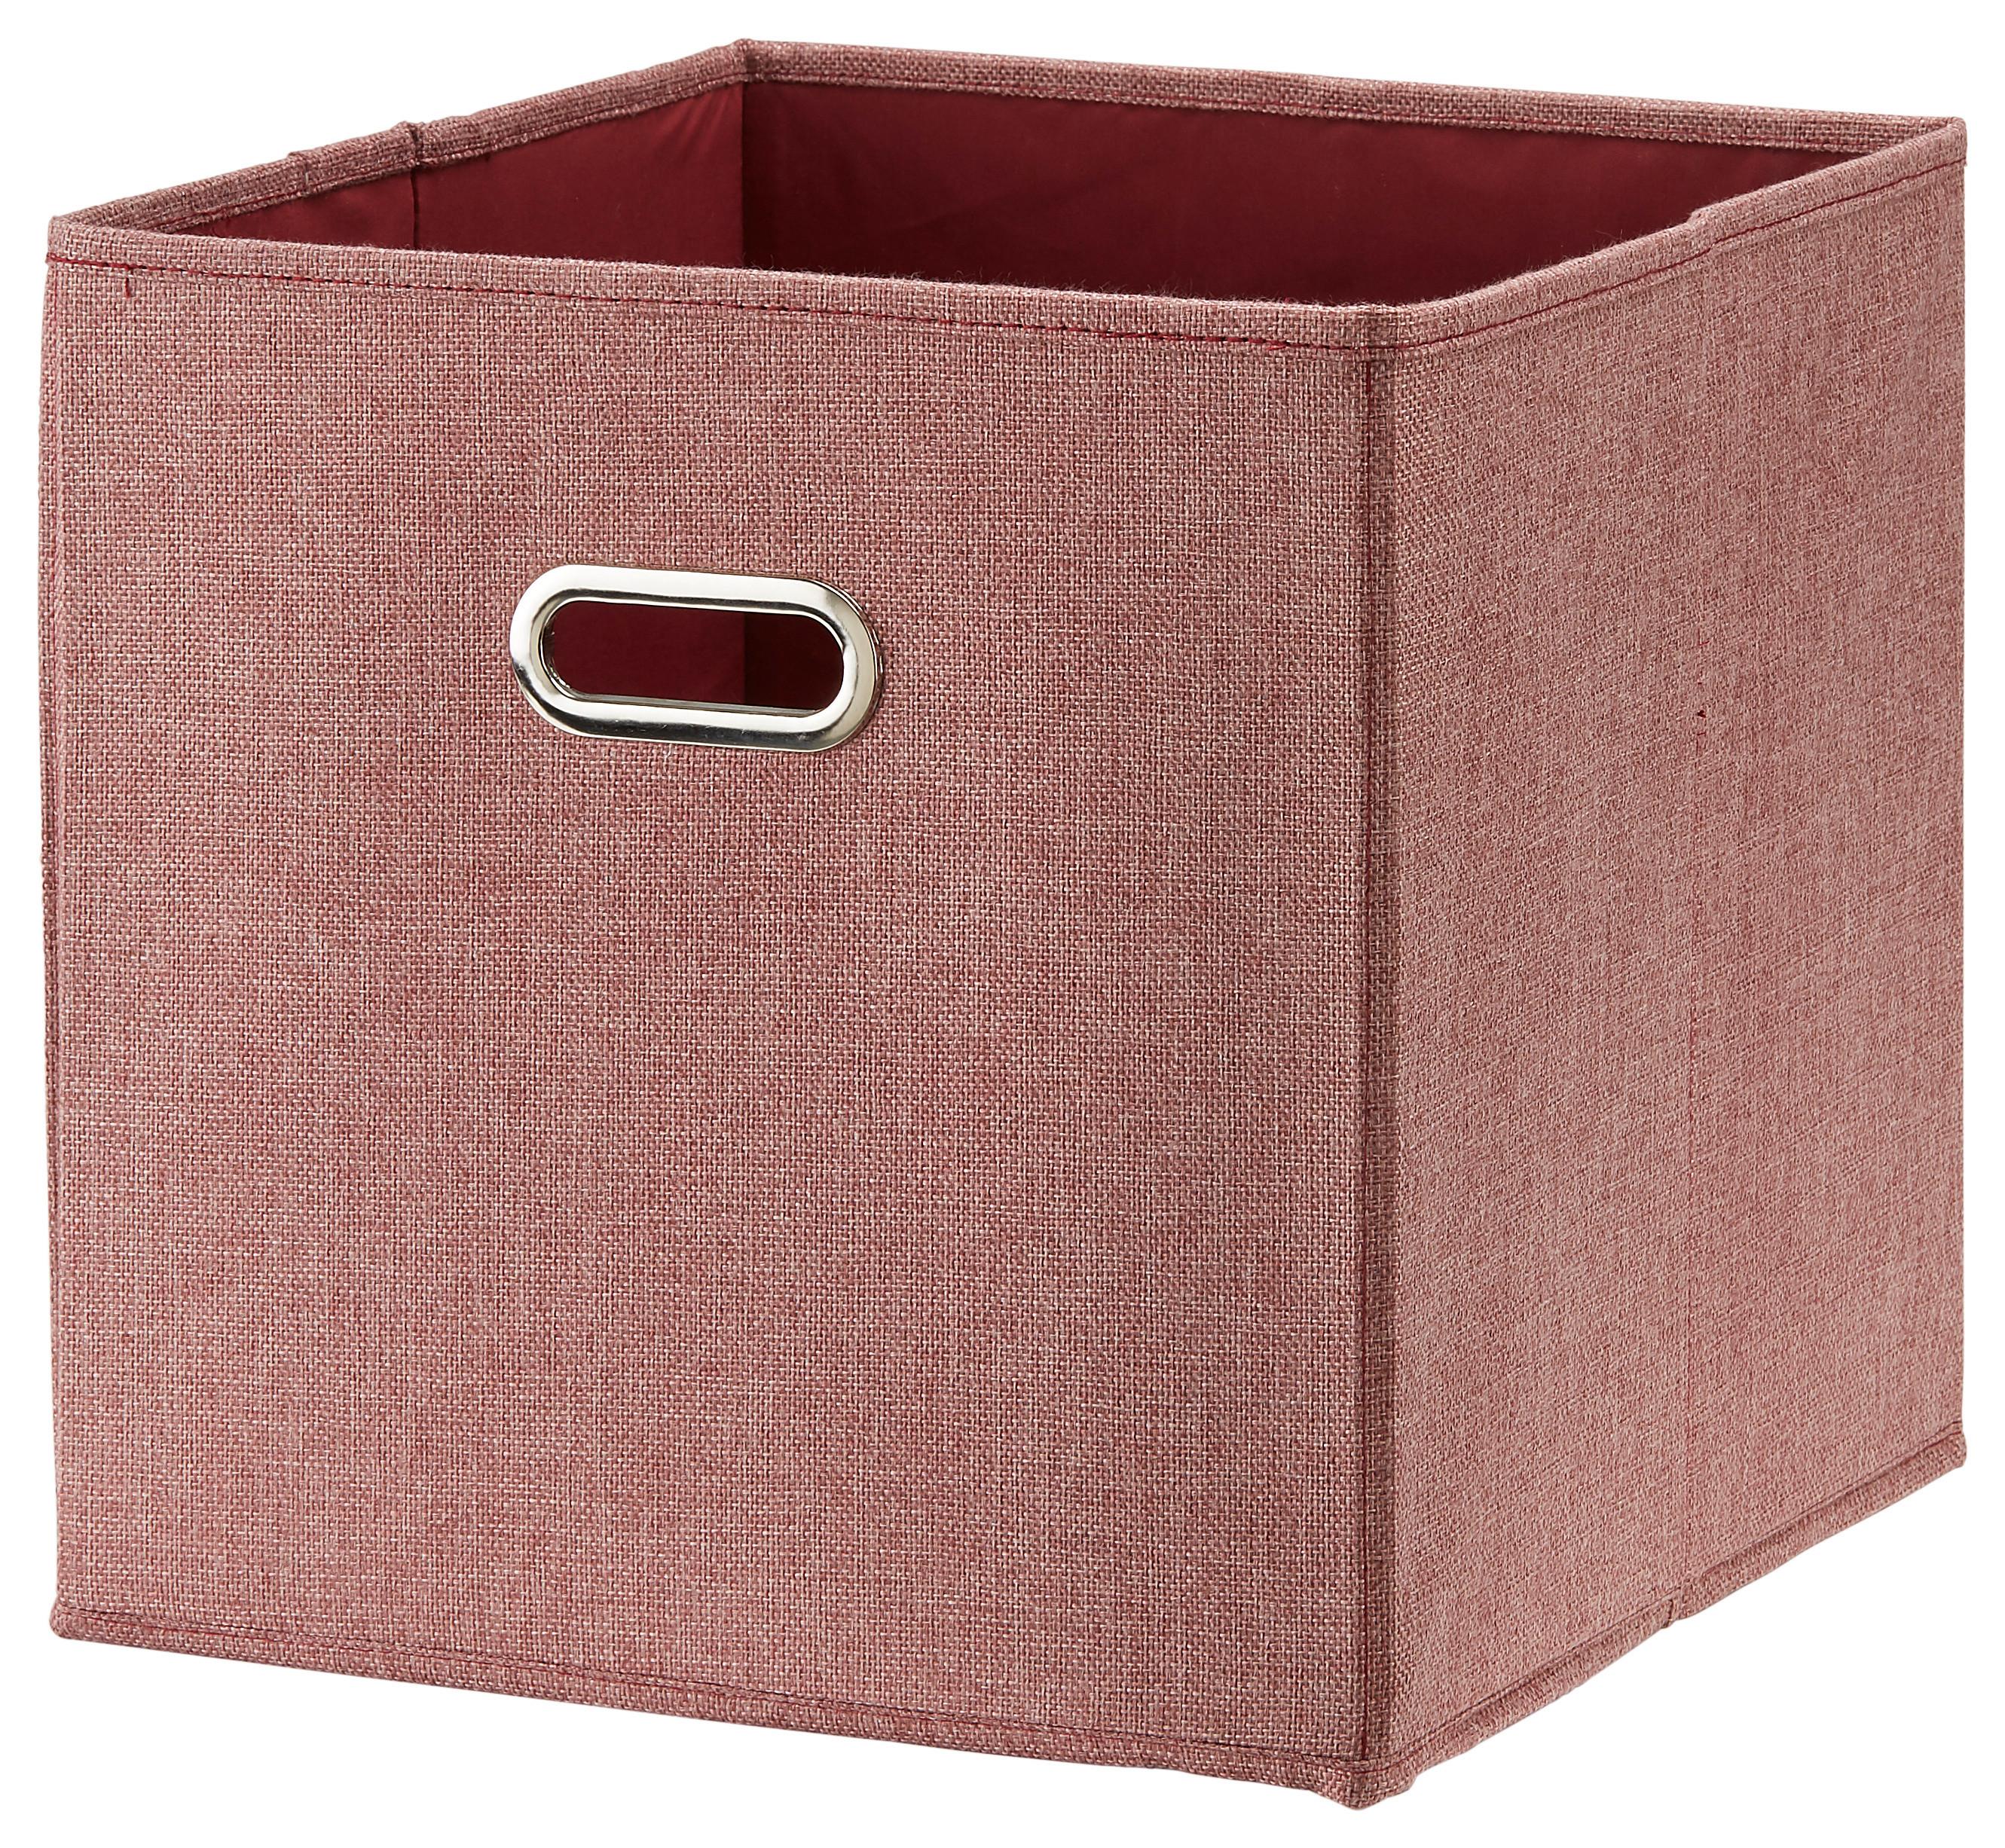 Skládací Krabice Bobby - Ca. 34l -Ext- - červenohnědá, Moderní, karton/textil (33/32/33cm) - Premium Living